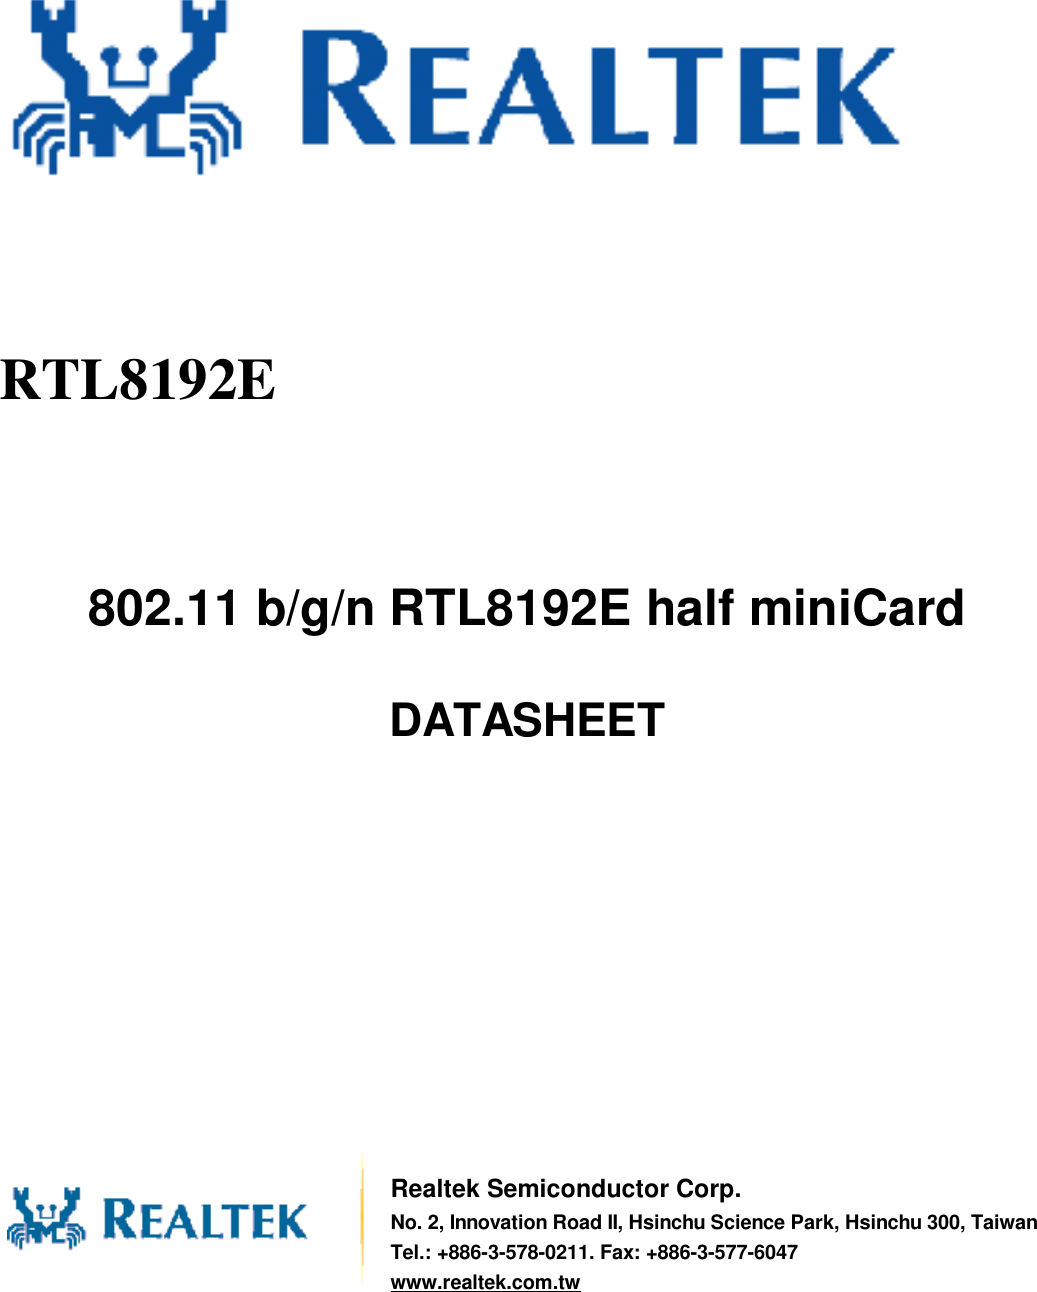                802.11 b/g/n RTL8192E half miniCard  DATASHEET                  Realtek Semiconductor Corp. No. 2, Innovation Road II, Hsinchu Science Park, Hsinchu 300, Taiwan Tel.: +886-3-578-0211. Fax: +886-3-577-6047 www.realtek.com.tw RTL8192E  